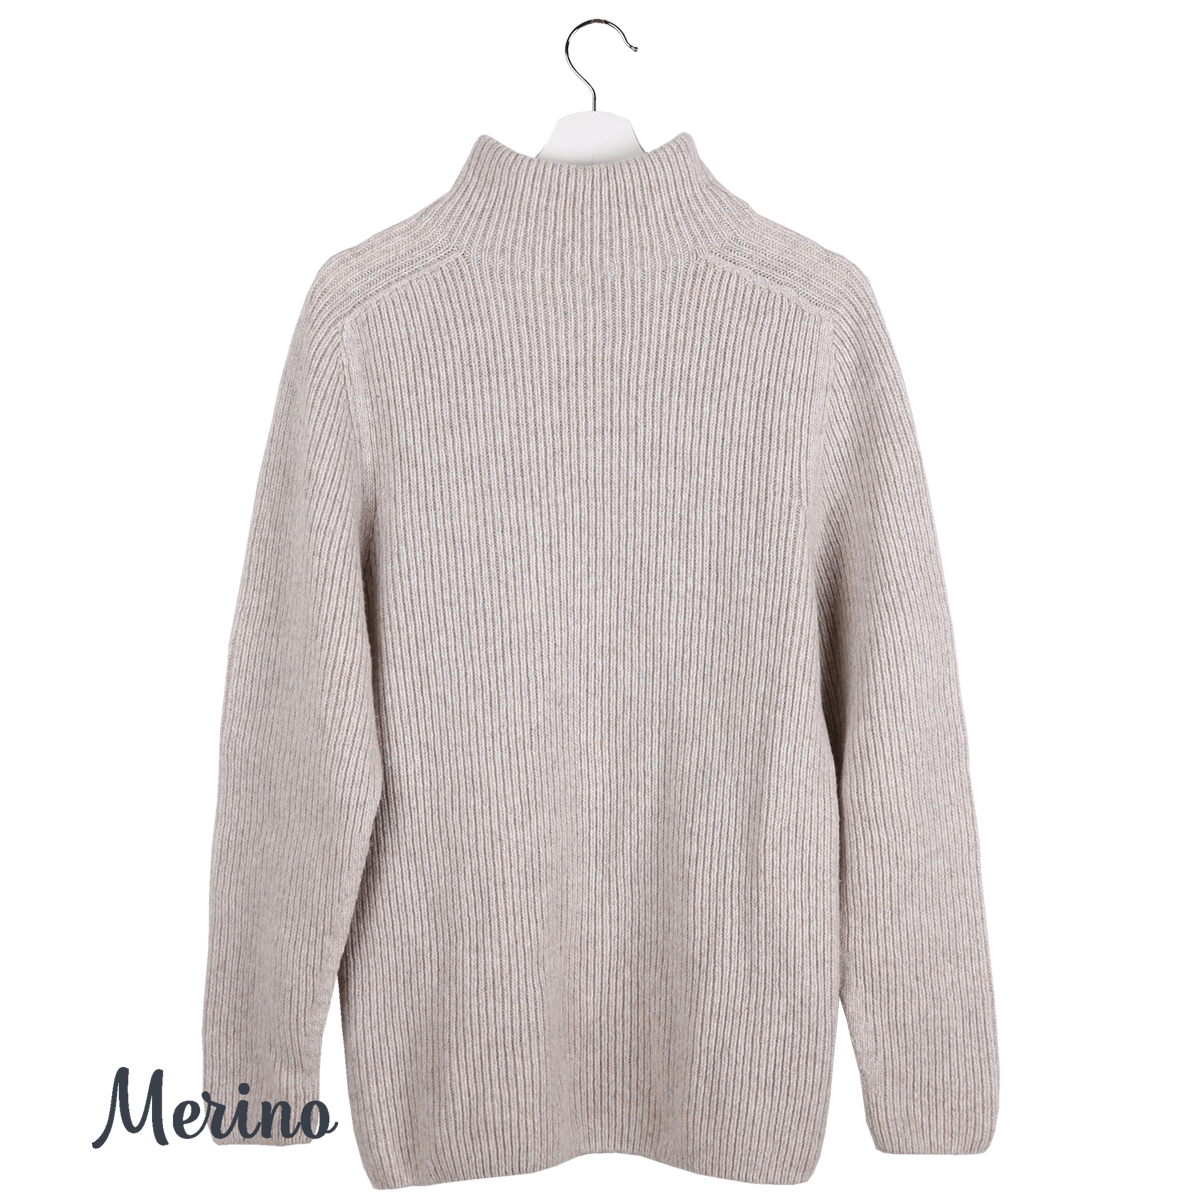 Merino Lambswool sweater for adults